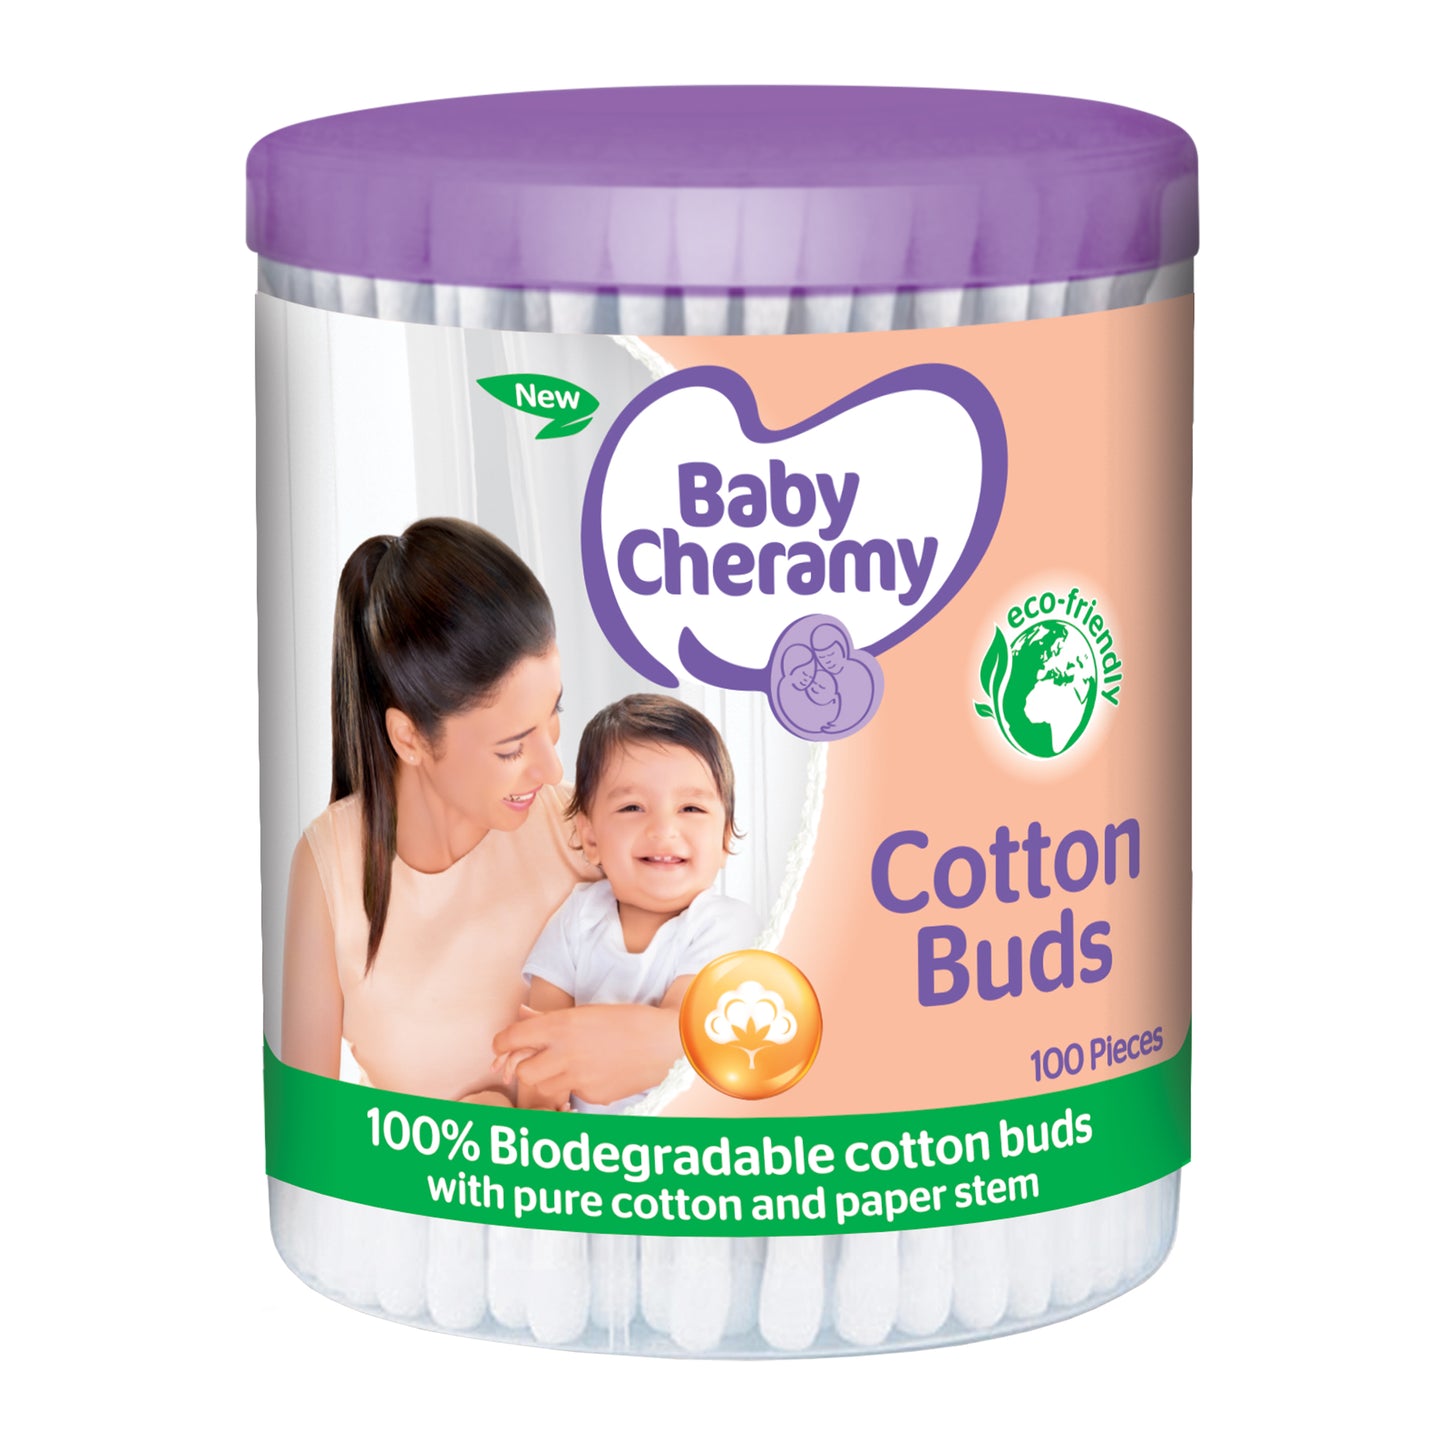 Baby Cheramy Cotton Buds (100 Pieces)